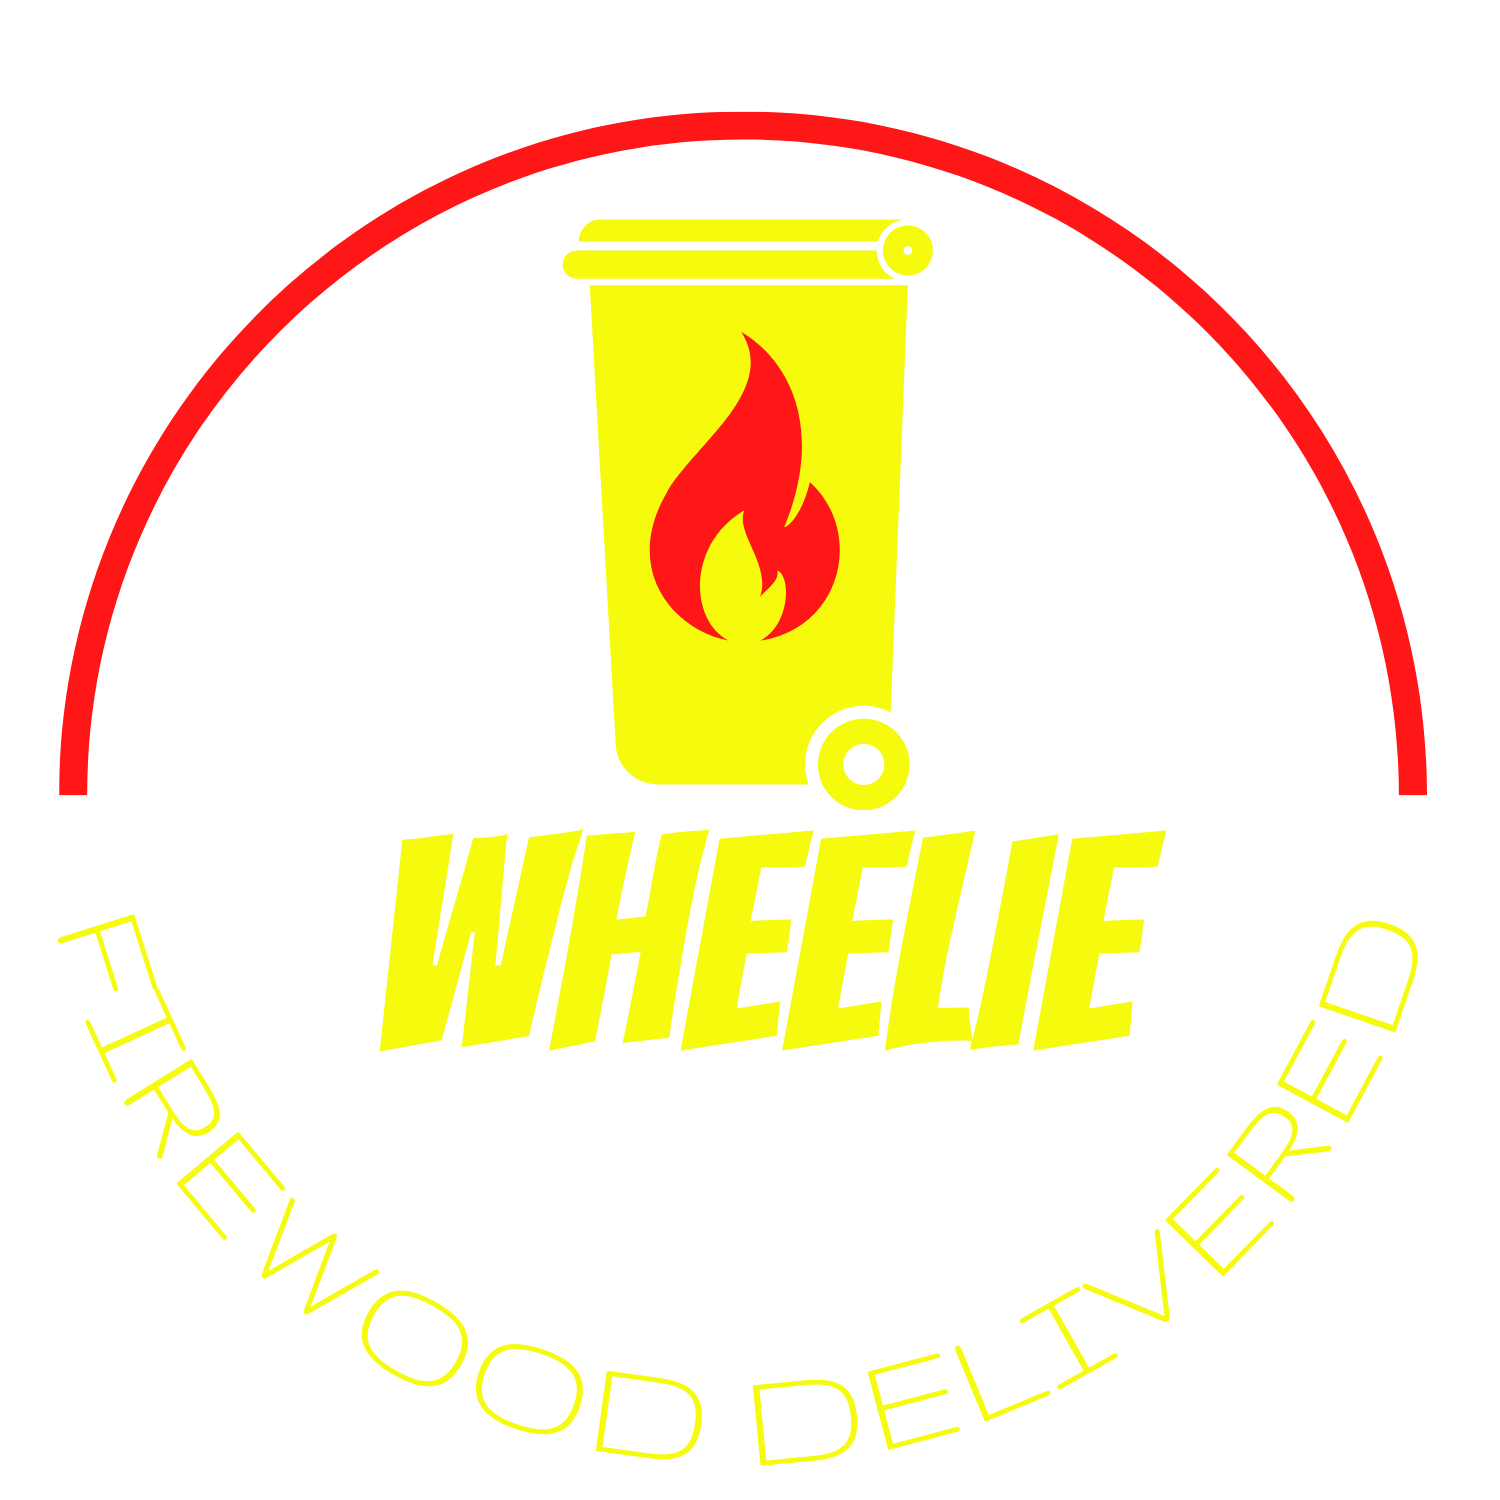 Wheelie Hot Wood - Canberra